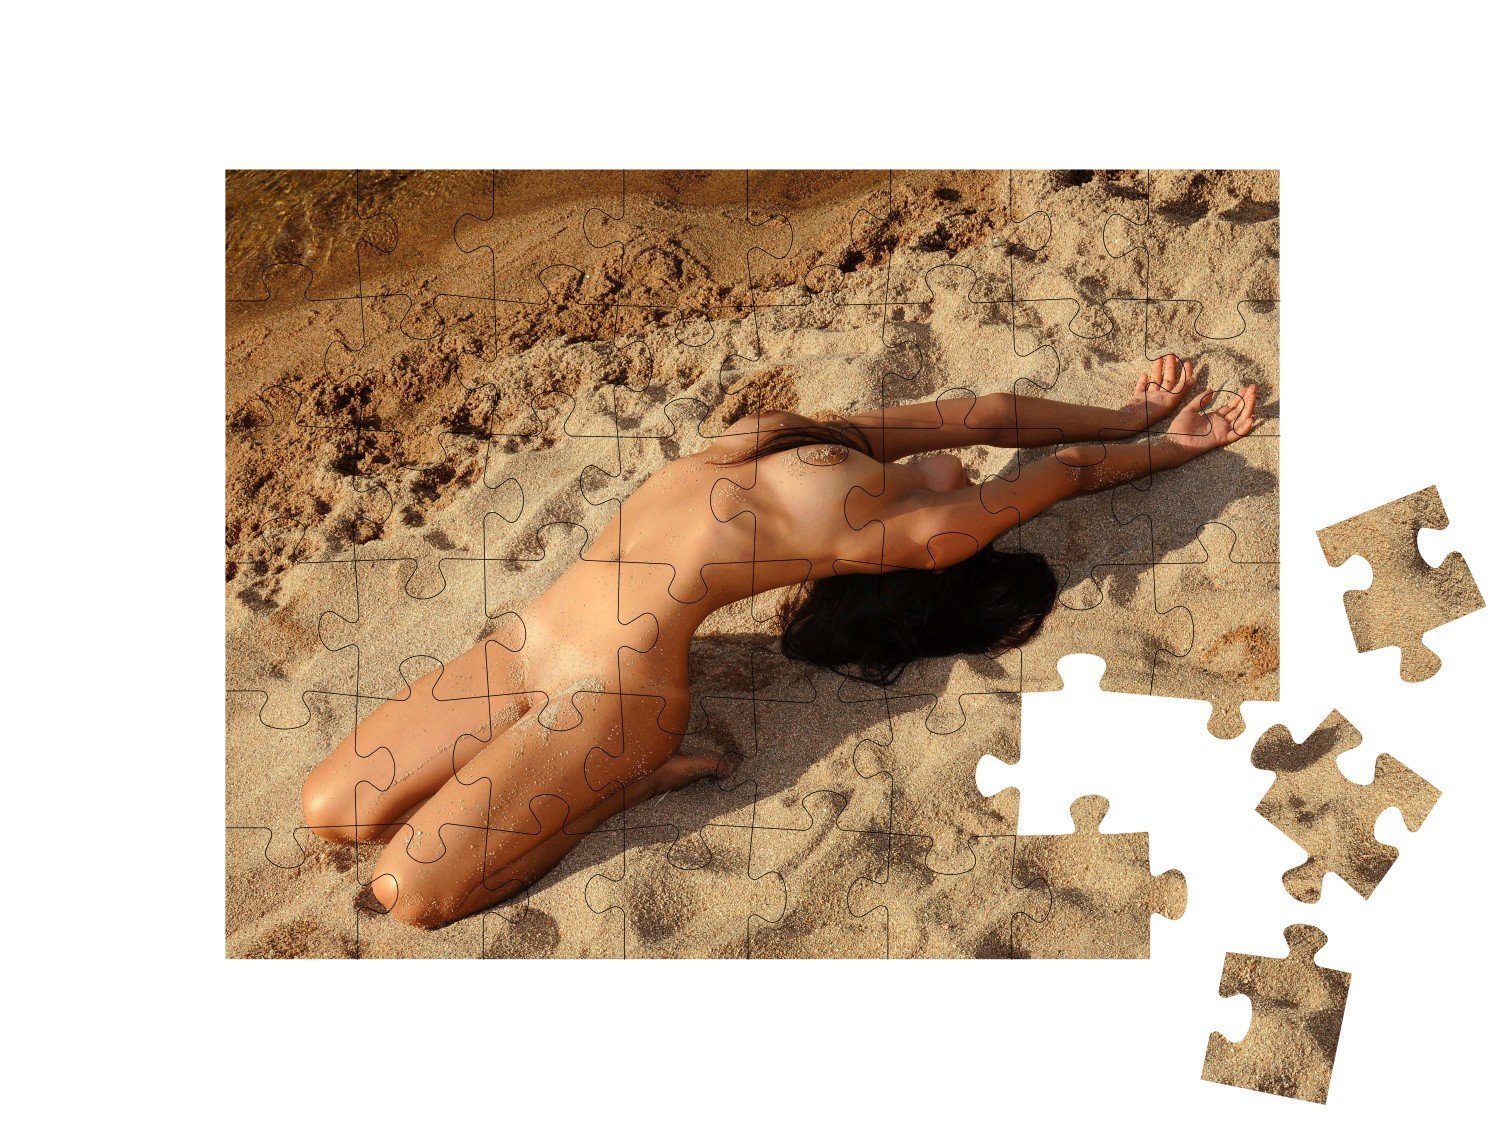 Erotik puzzleYOU-Kollektionen 48 Frau Puzzle Nackte Fotografie: Puzzleteile, Sandstrand, am Erotische puzzleYOU